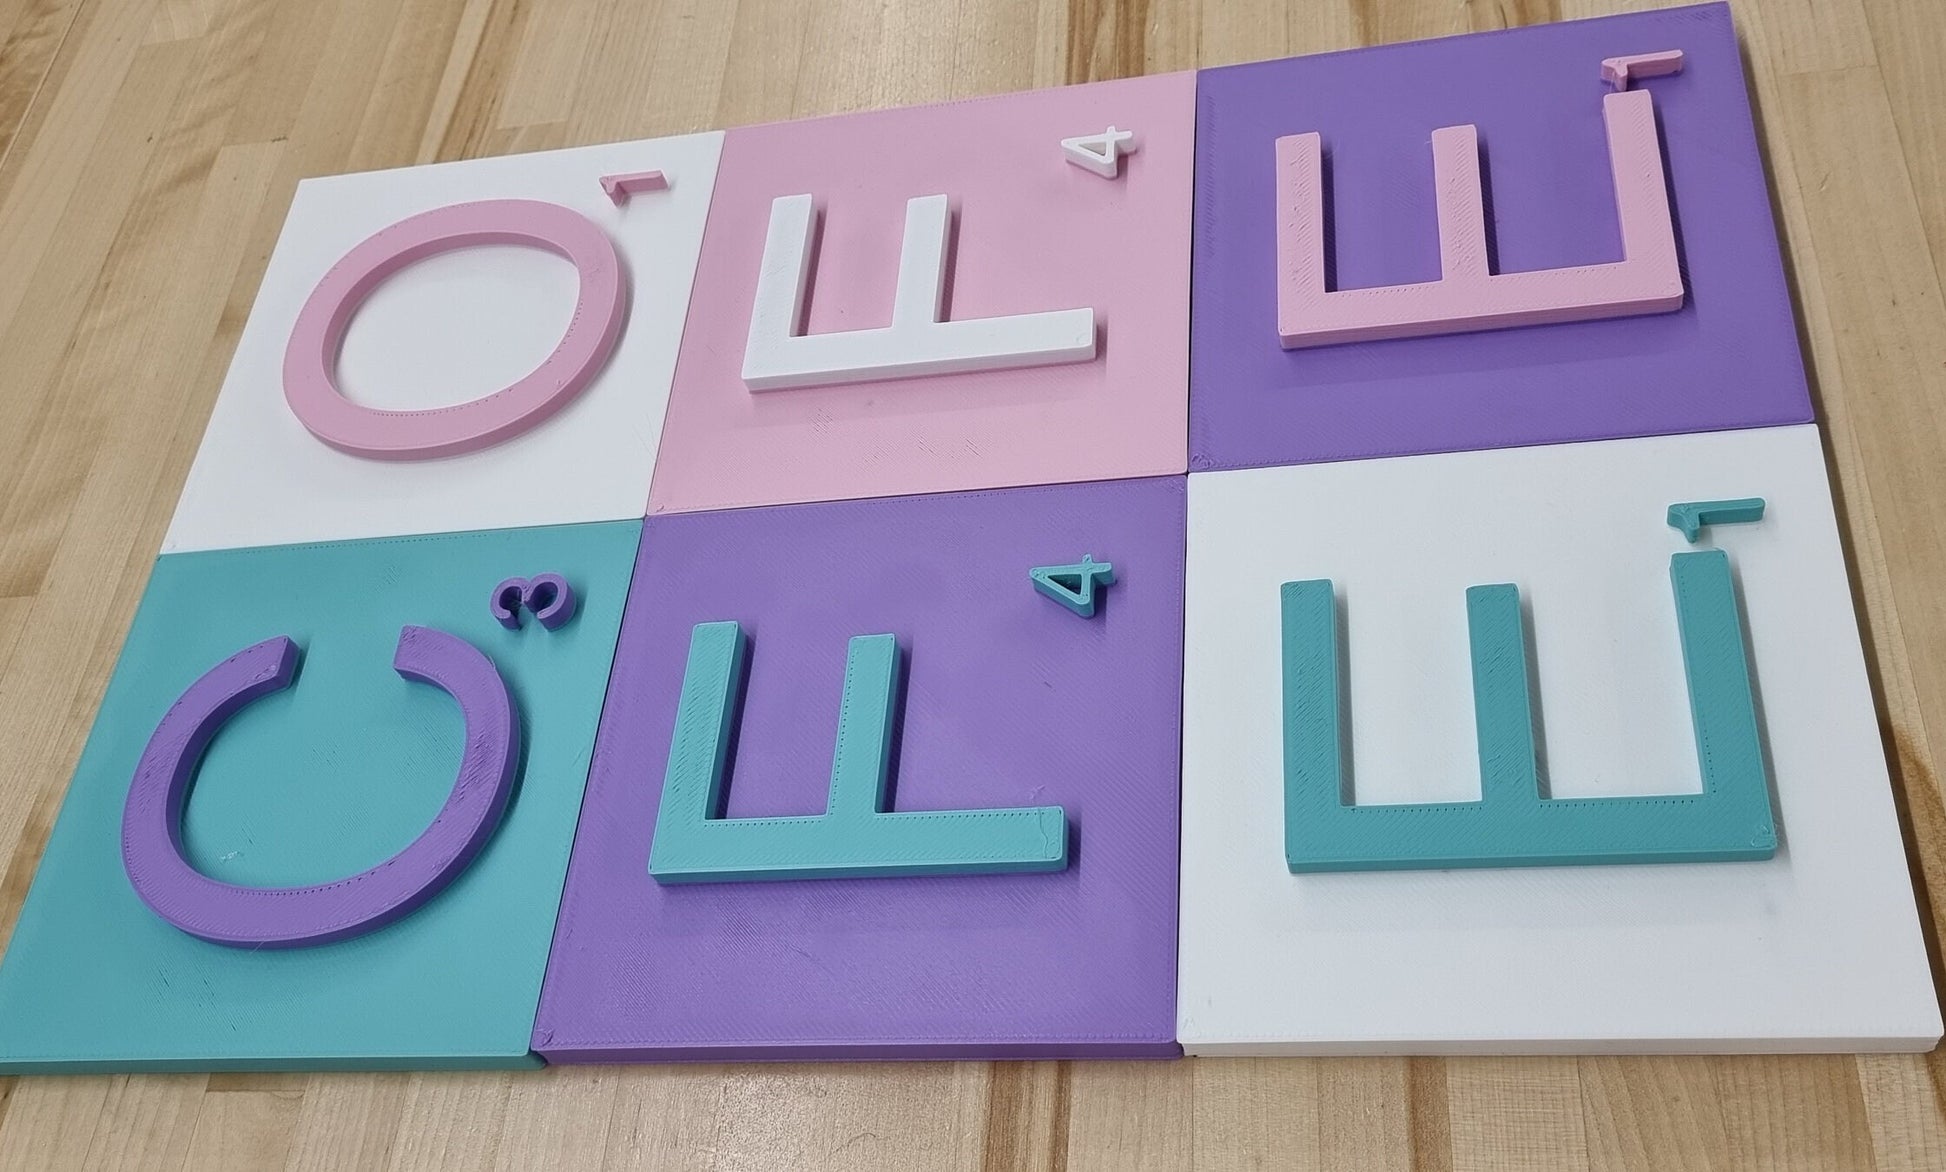 3D Effect Board Game Sign Letter Tiles - 5 Inch. Modern Look 3D Effect Sign Letter Tiles In Tons Of Colors!